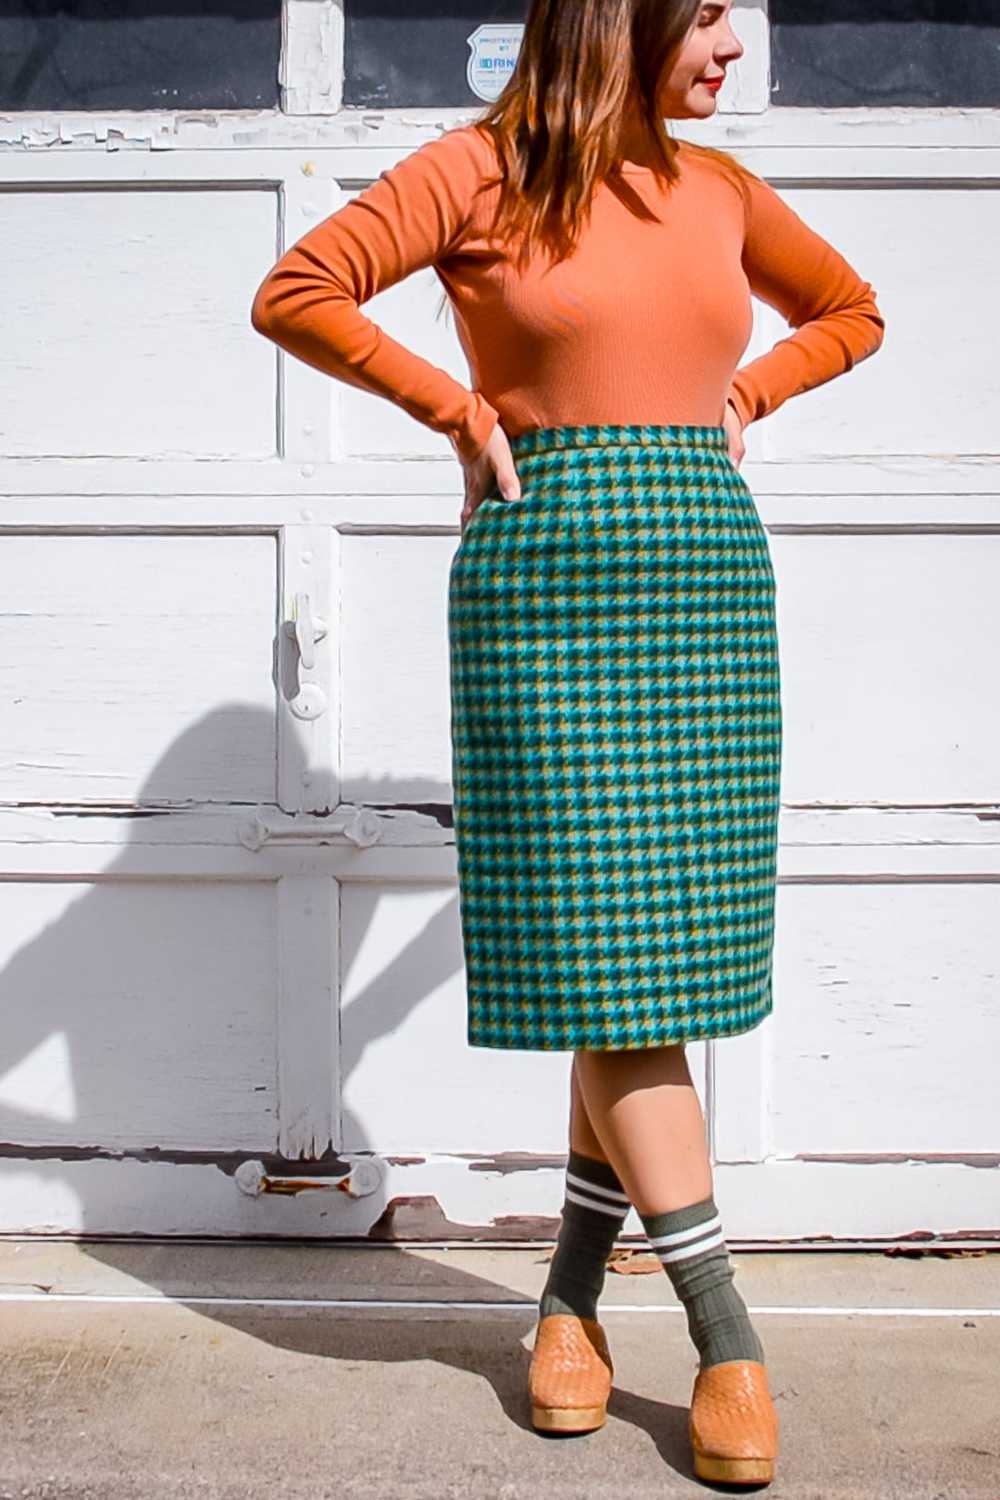 Vintage Teal Herringbone Pencil Skirt / Small - image 1